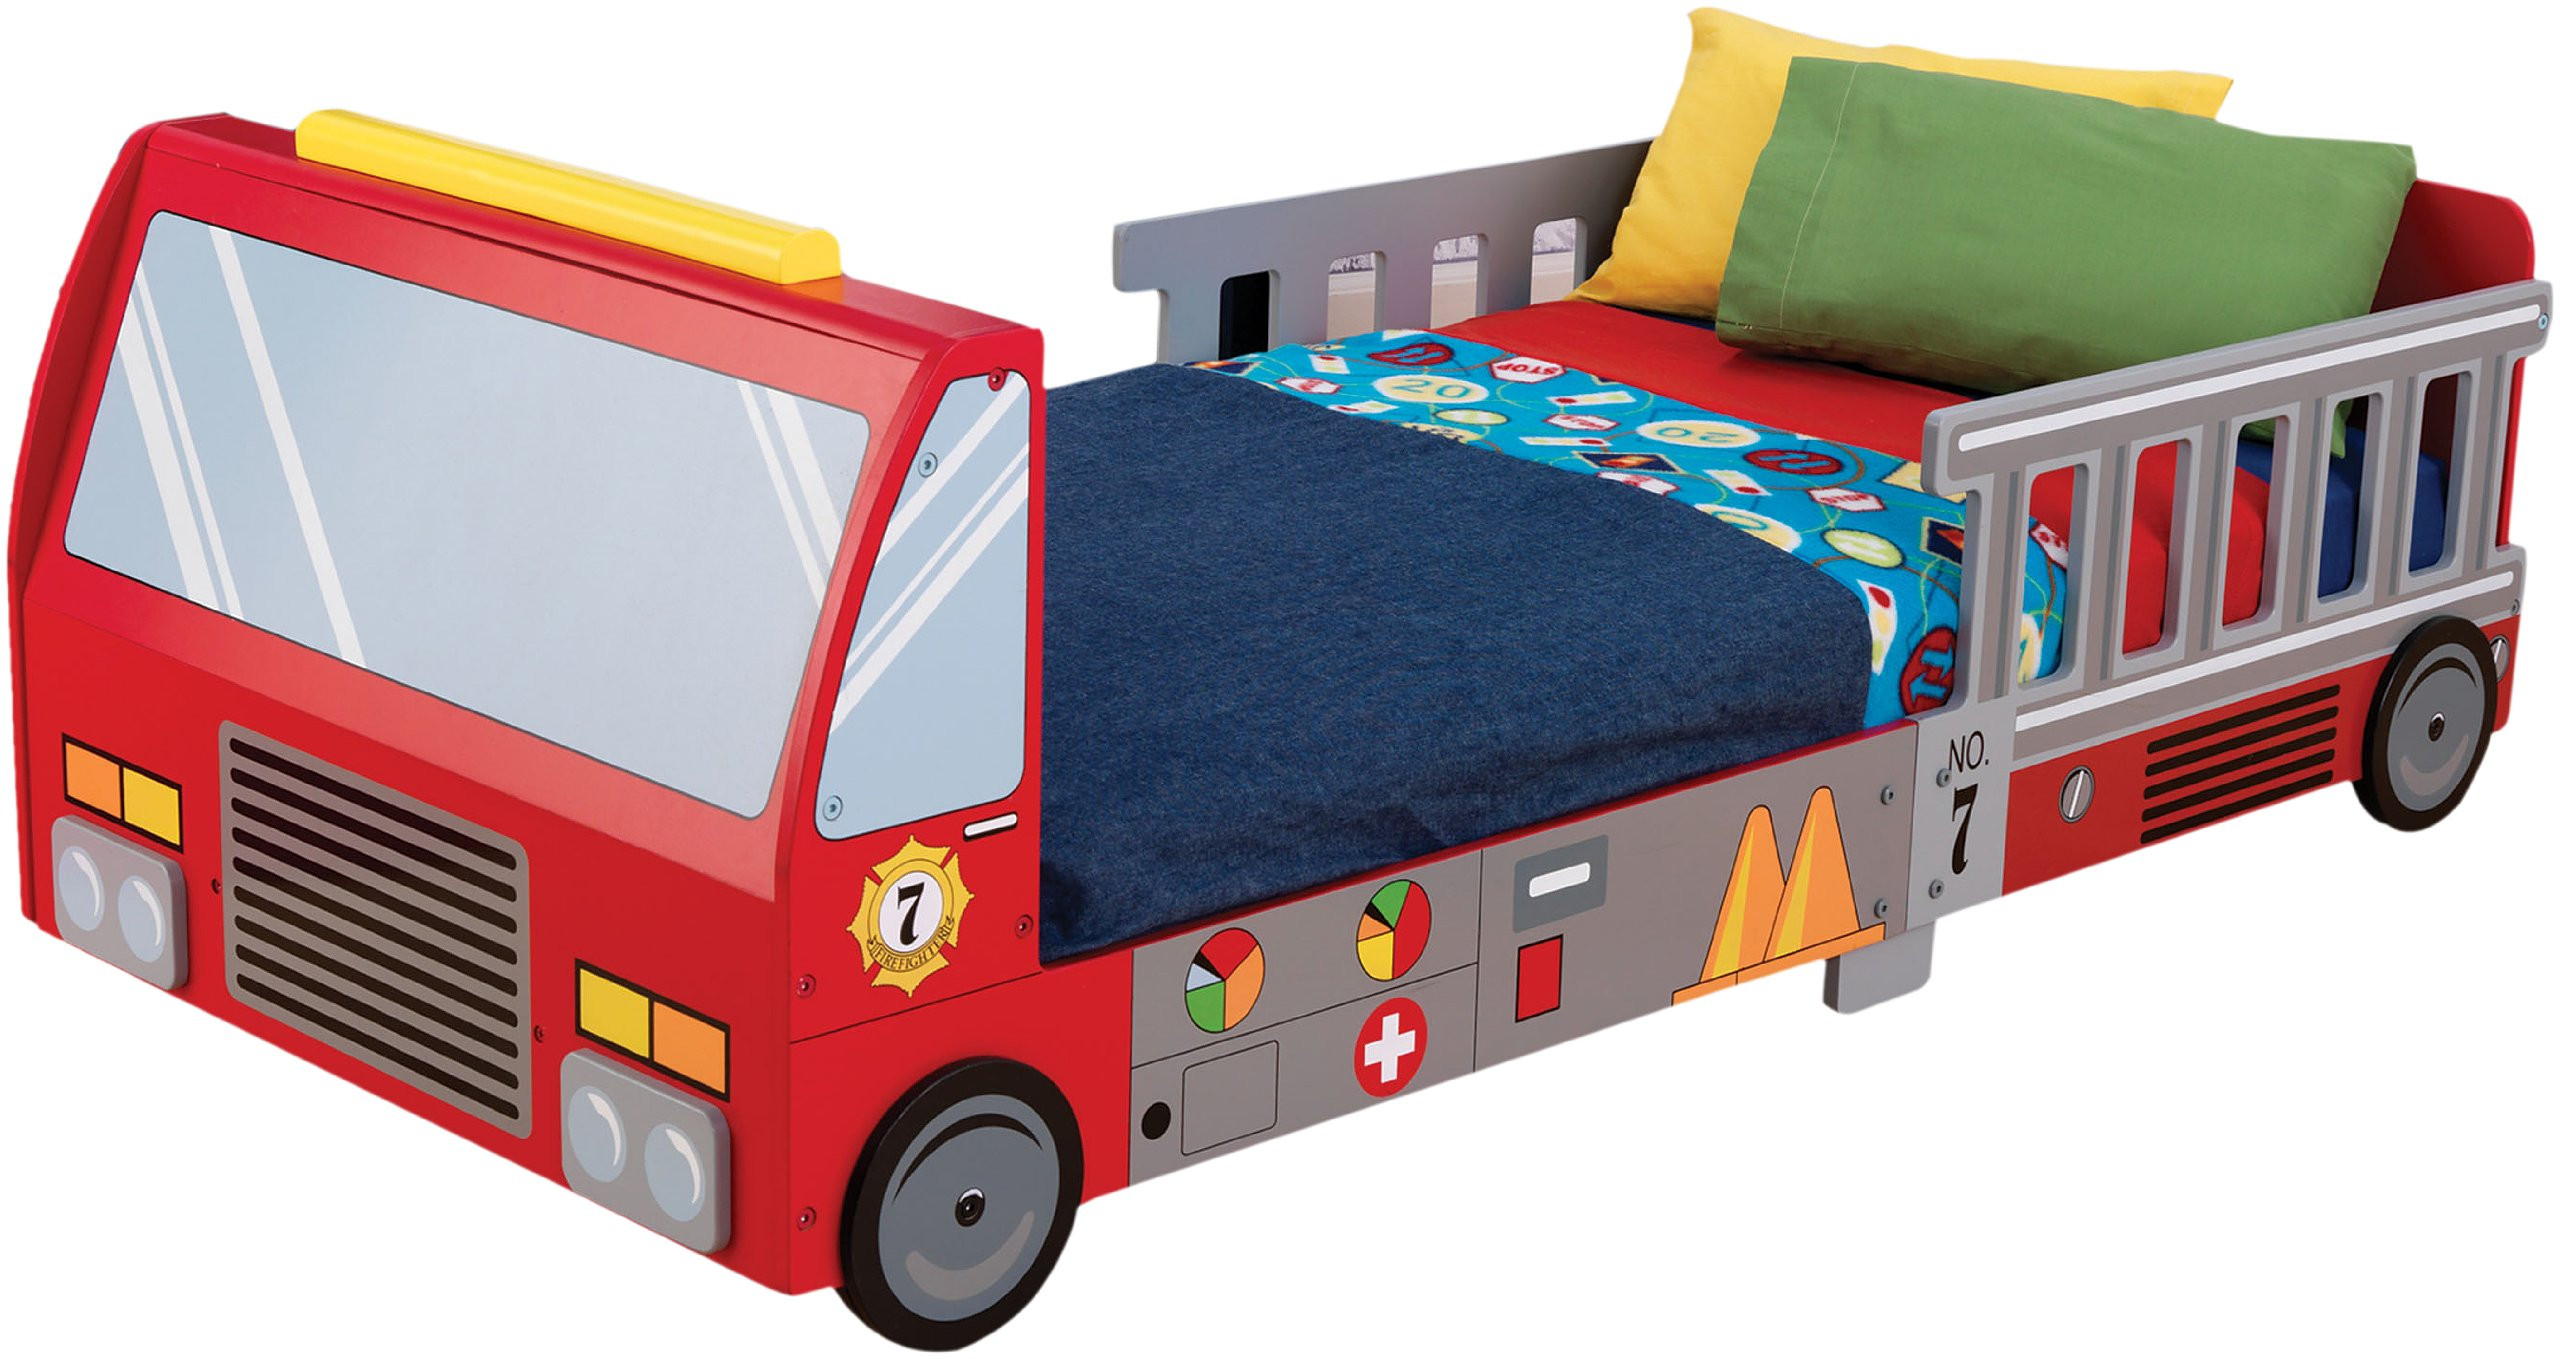 Fire Truck Kids Bedroom
 Amazon Carter s 4 Piece Toddler Bed Set Fire Truck